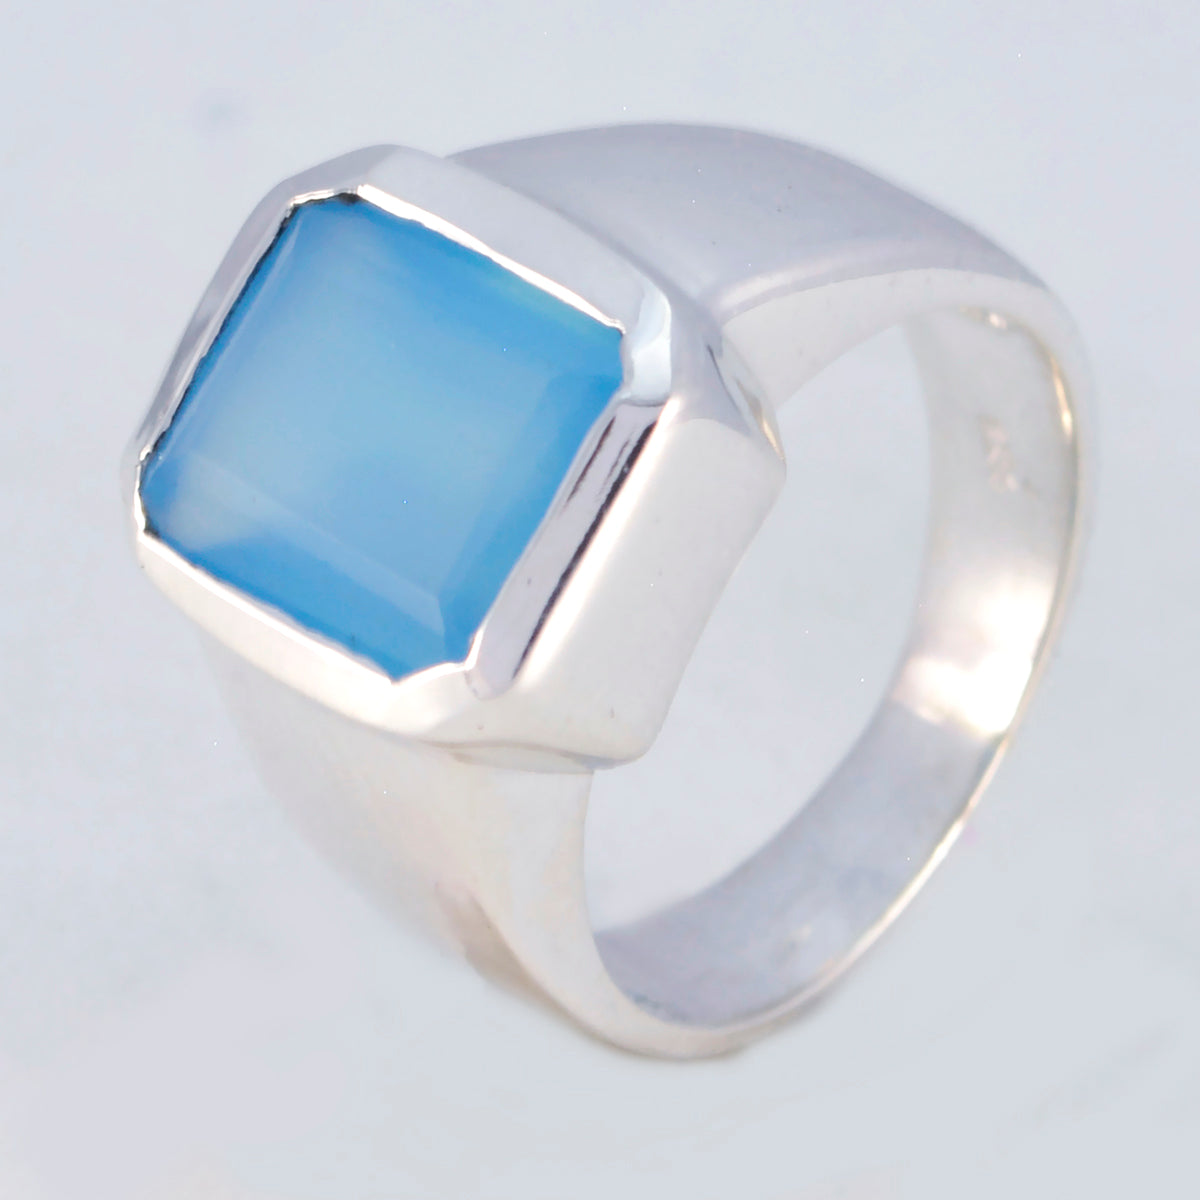 Riyo Teasing Gemstone Chalcedony 925 Silver Ring Pre Owned Jewelry